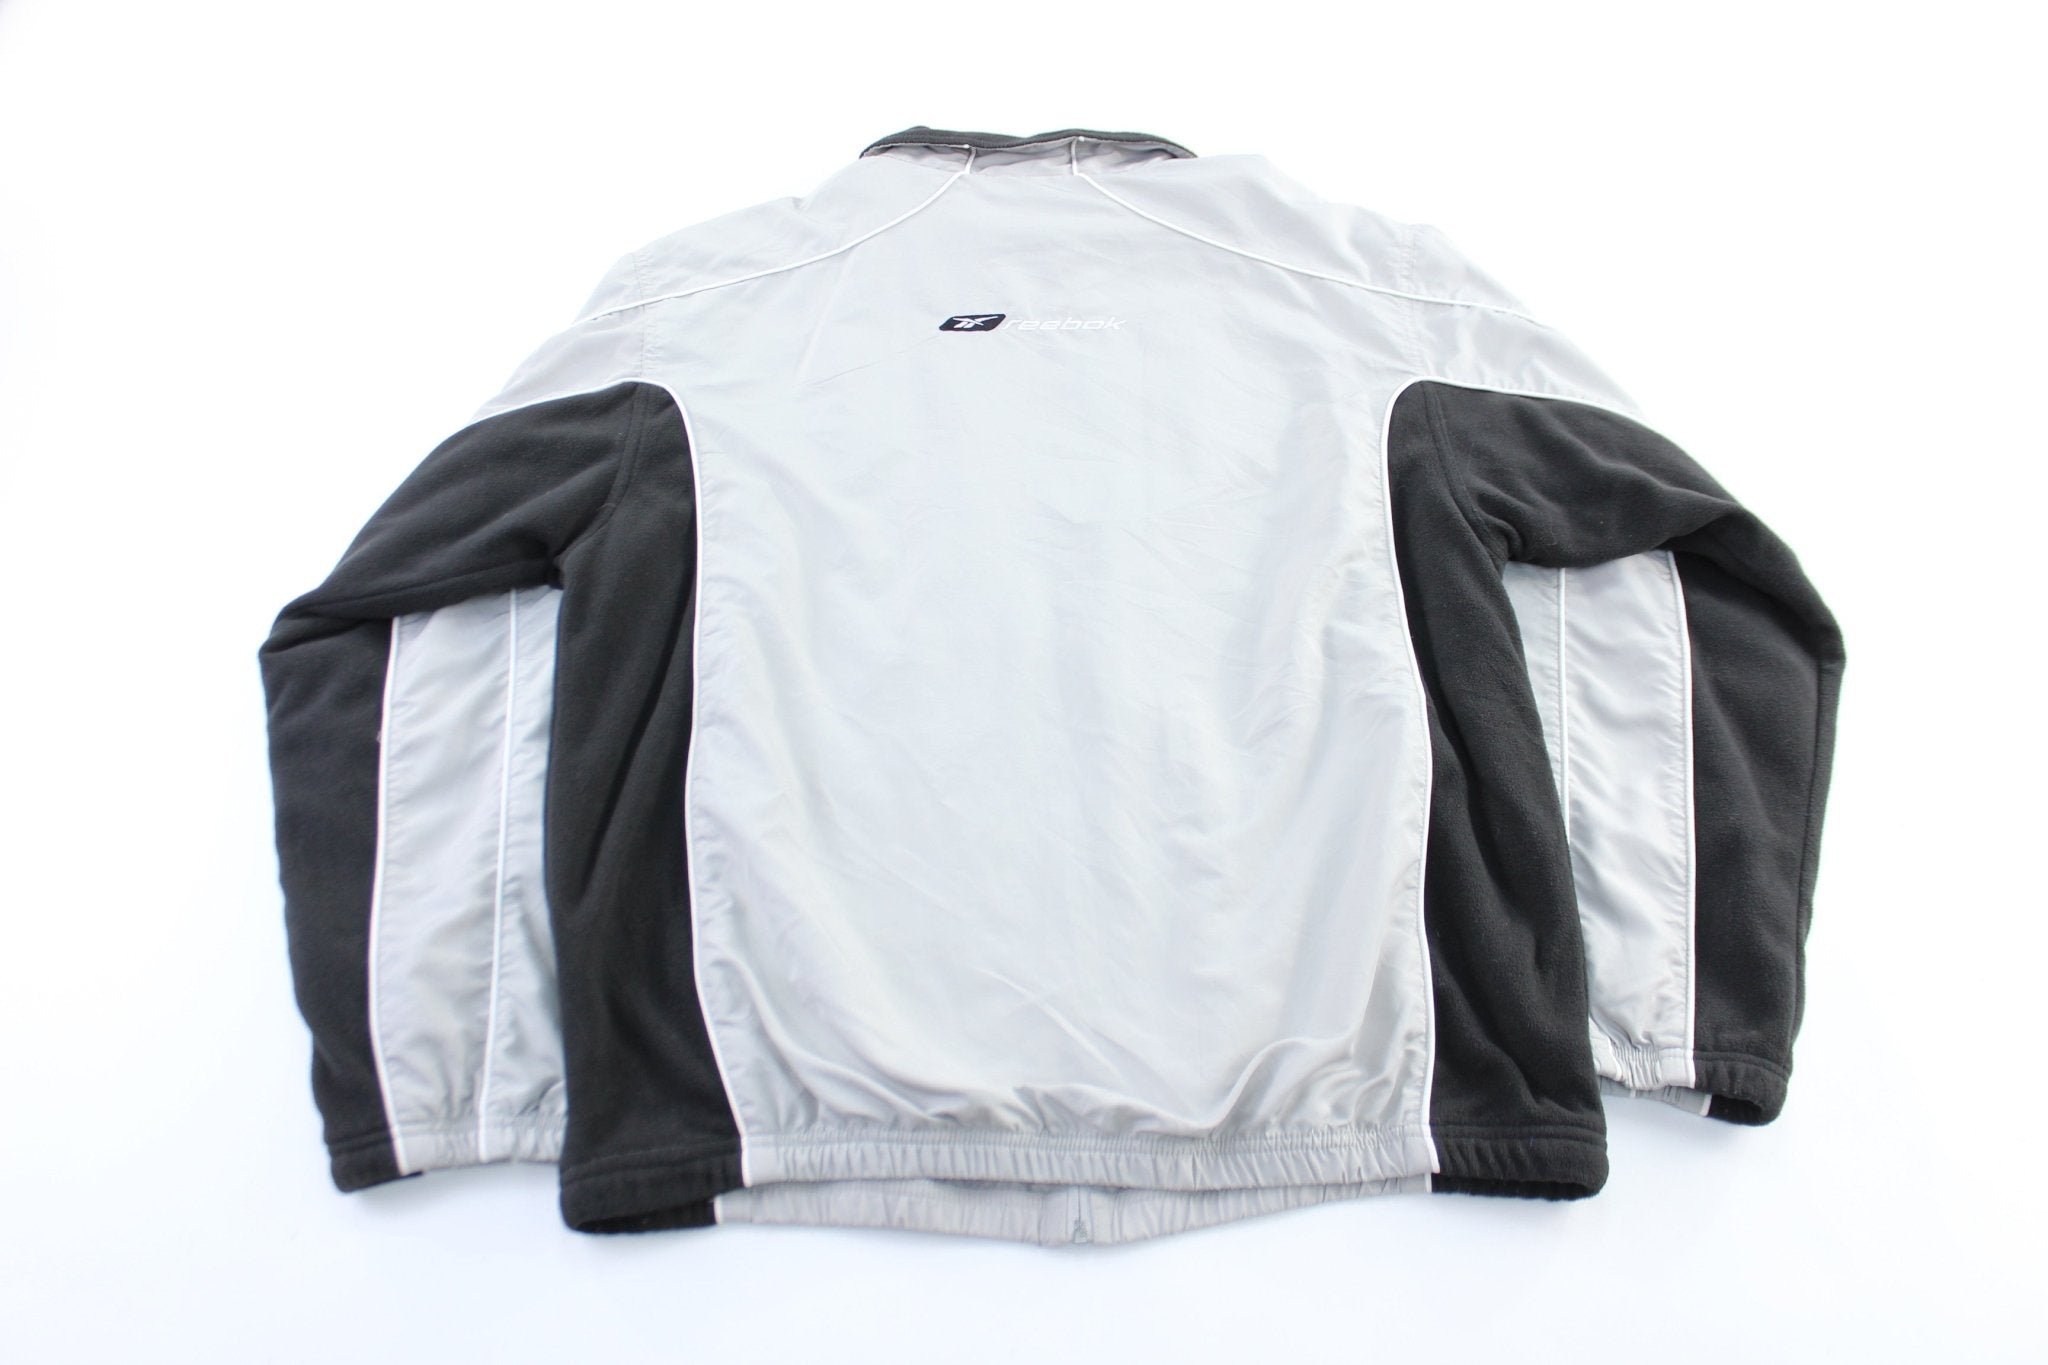 Reebok Embroidered Logo Black & Grey Zip Up Jacket - ThriftedThreads.com